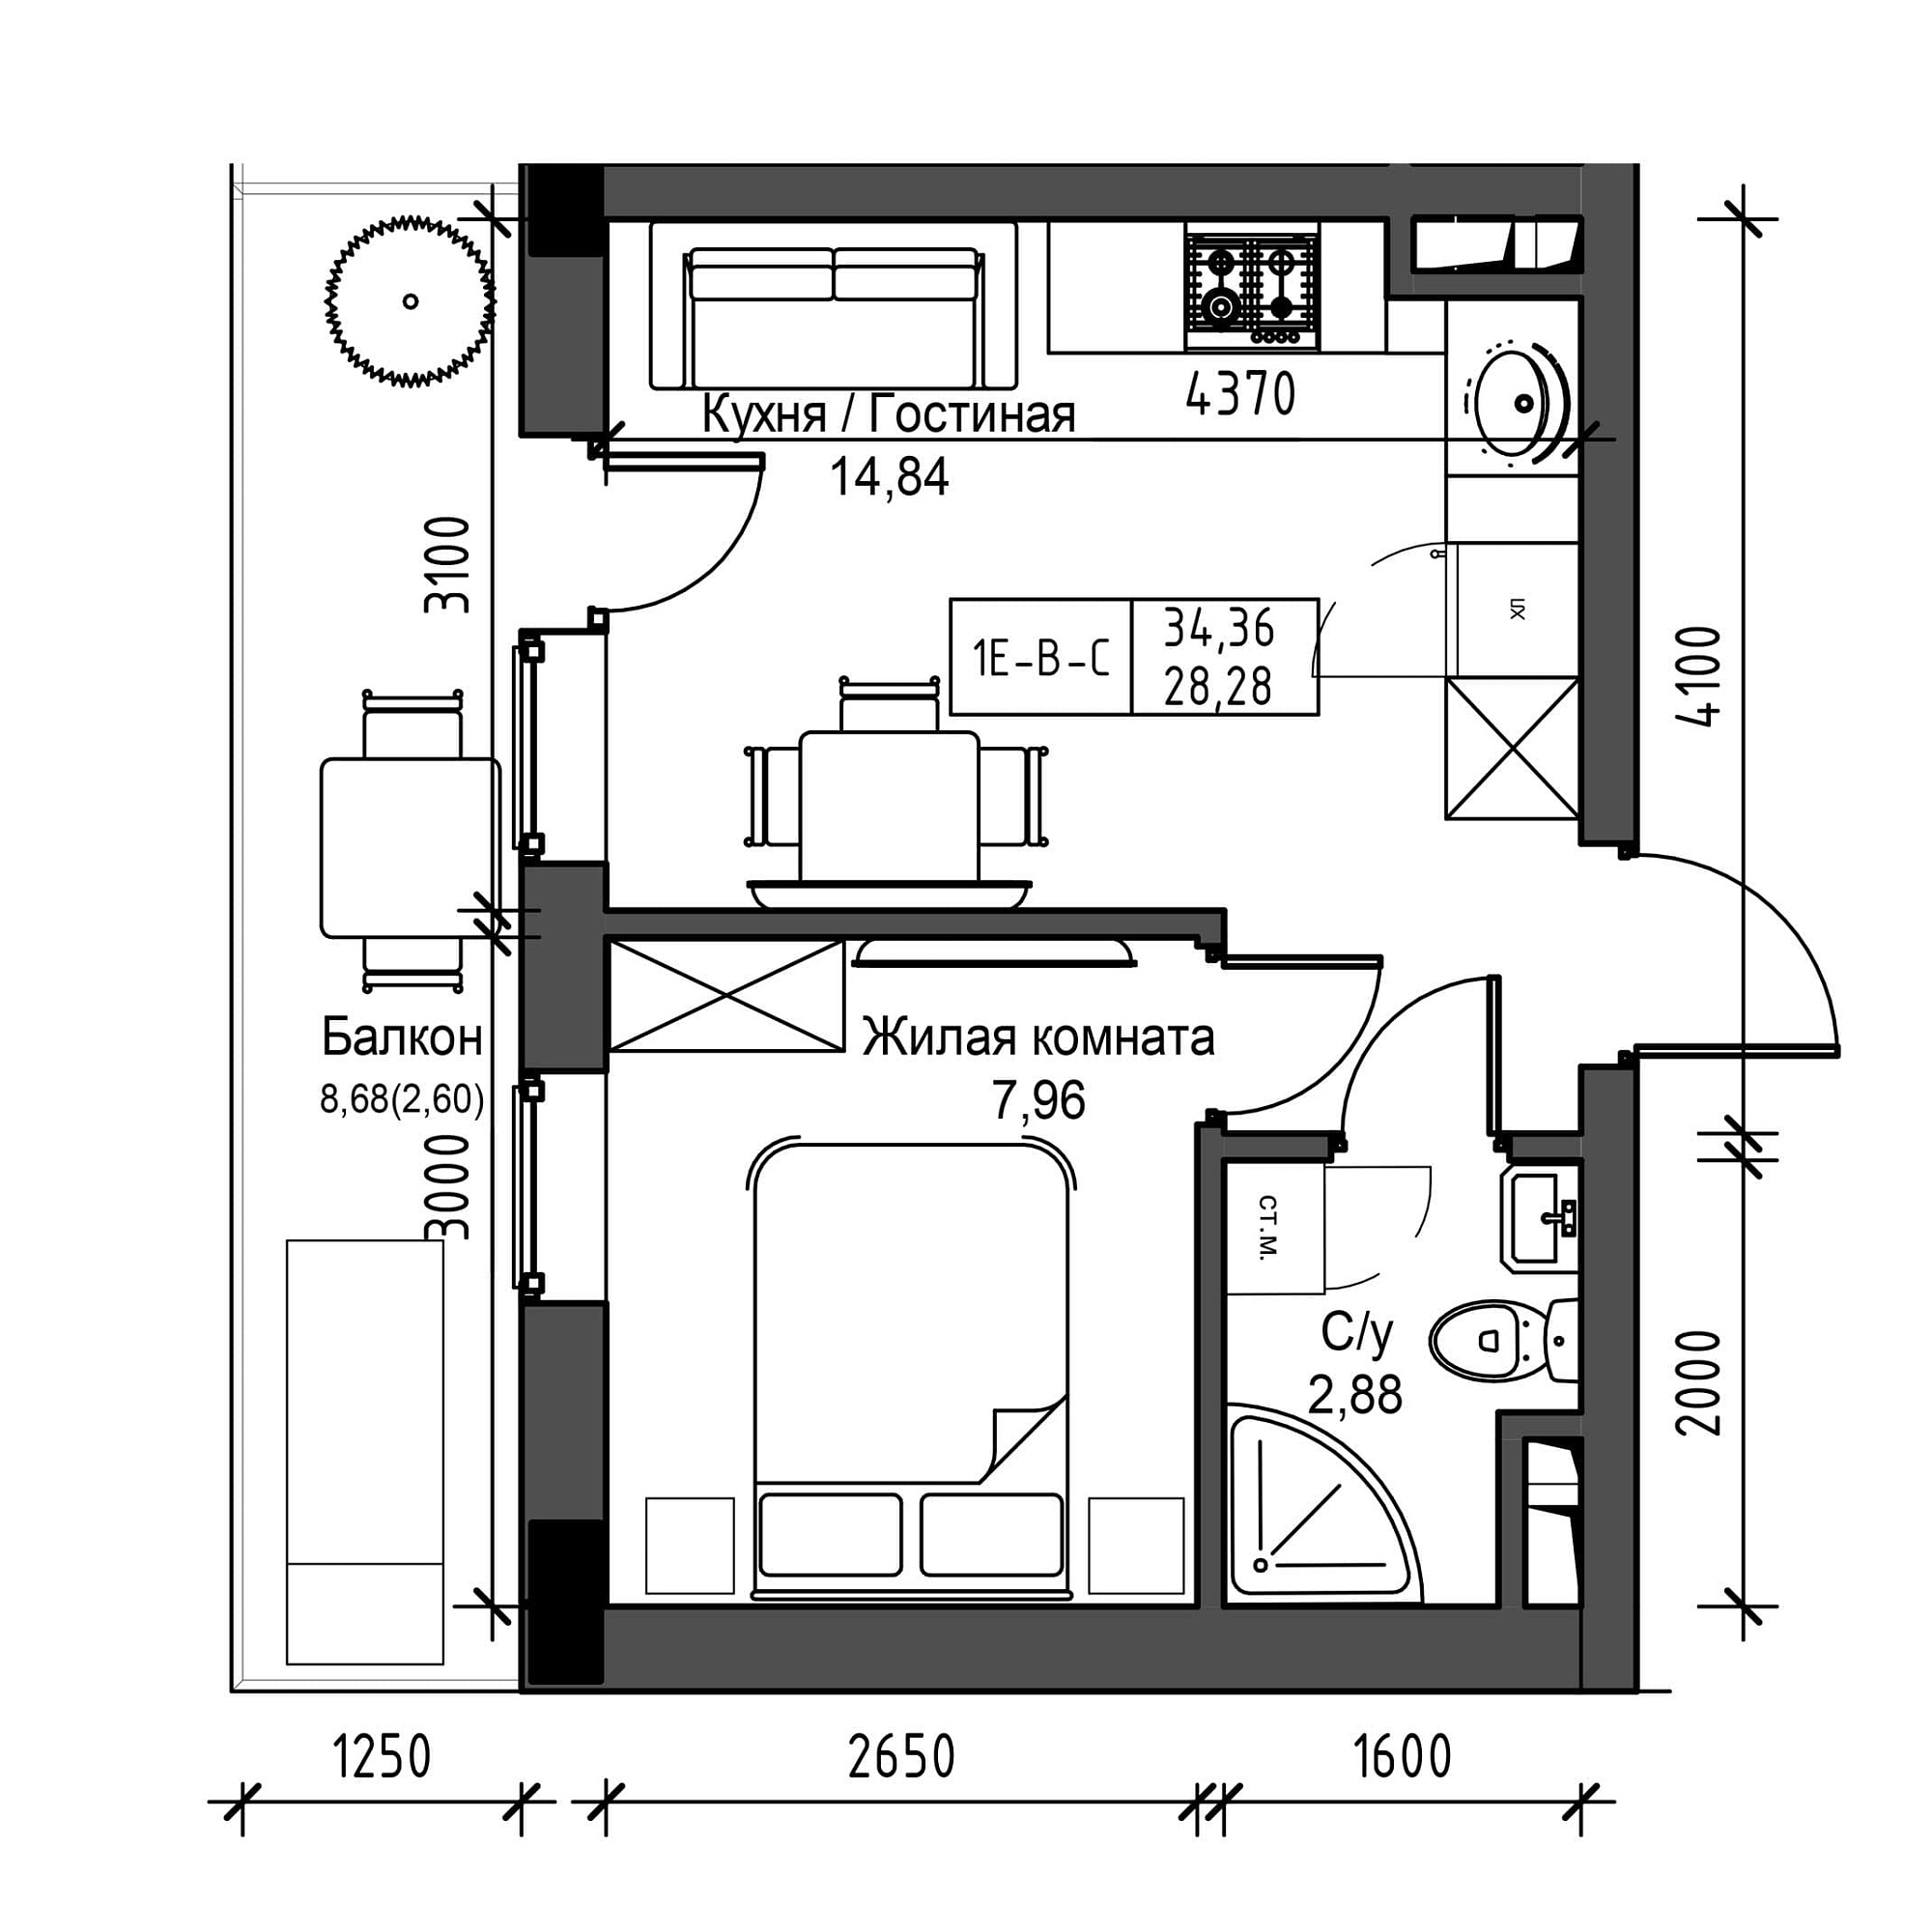 Планування 1-к квартира площею 28.28м2, UM-001-08/0014.